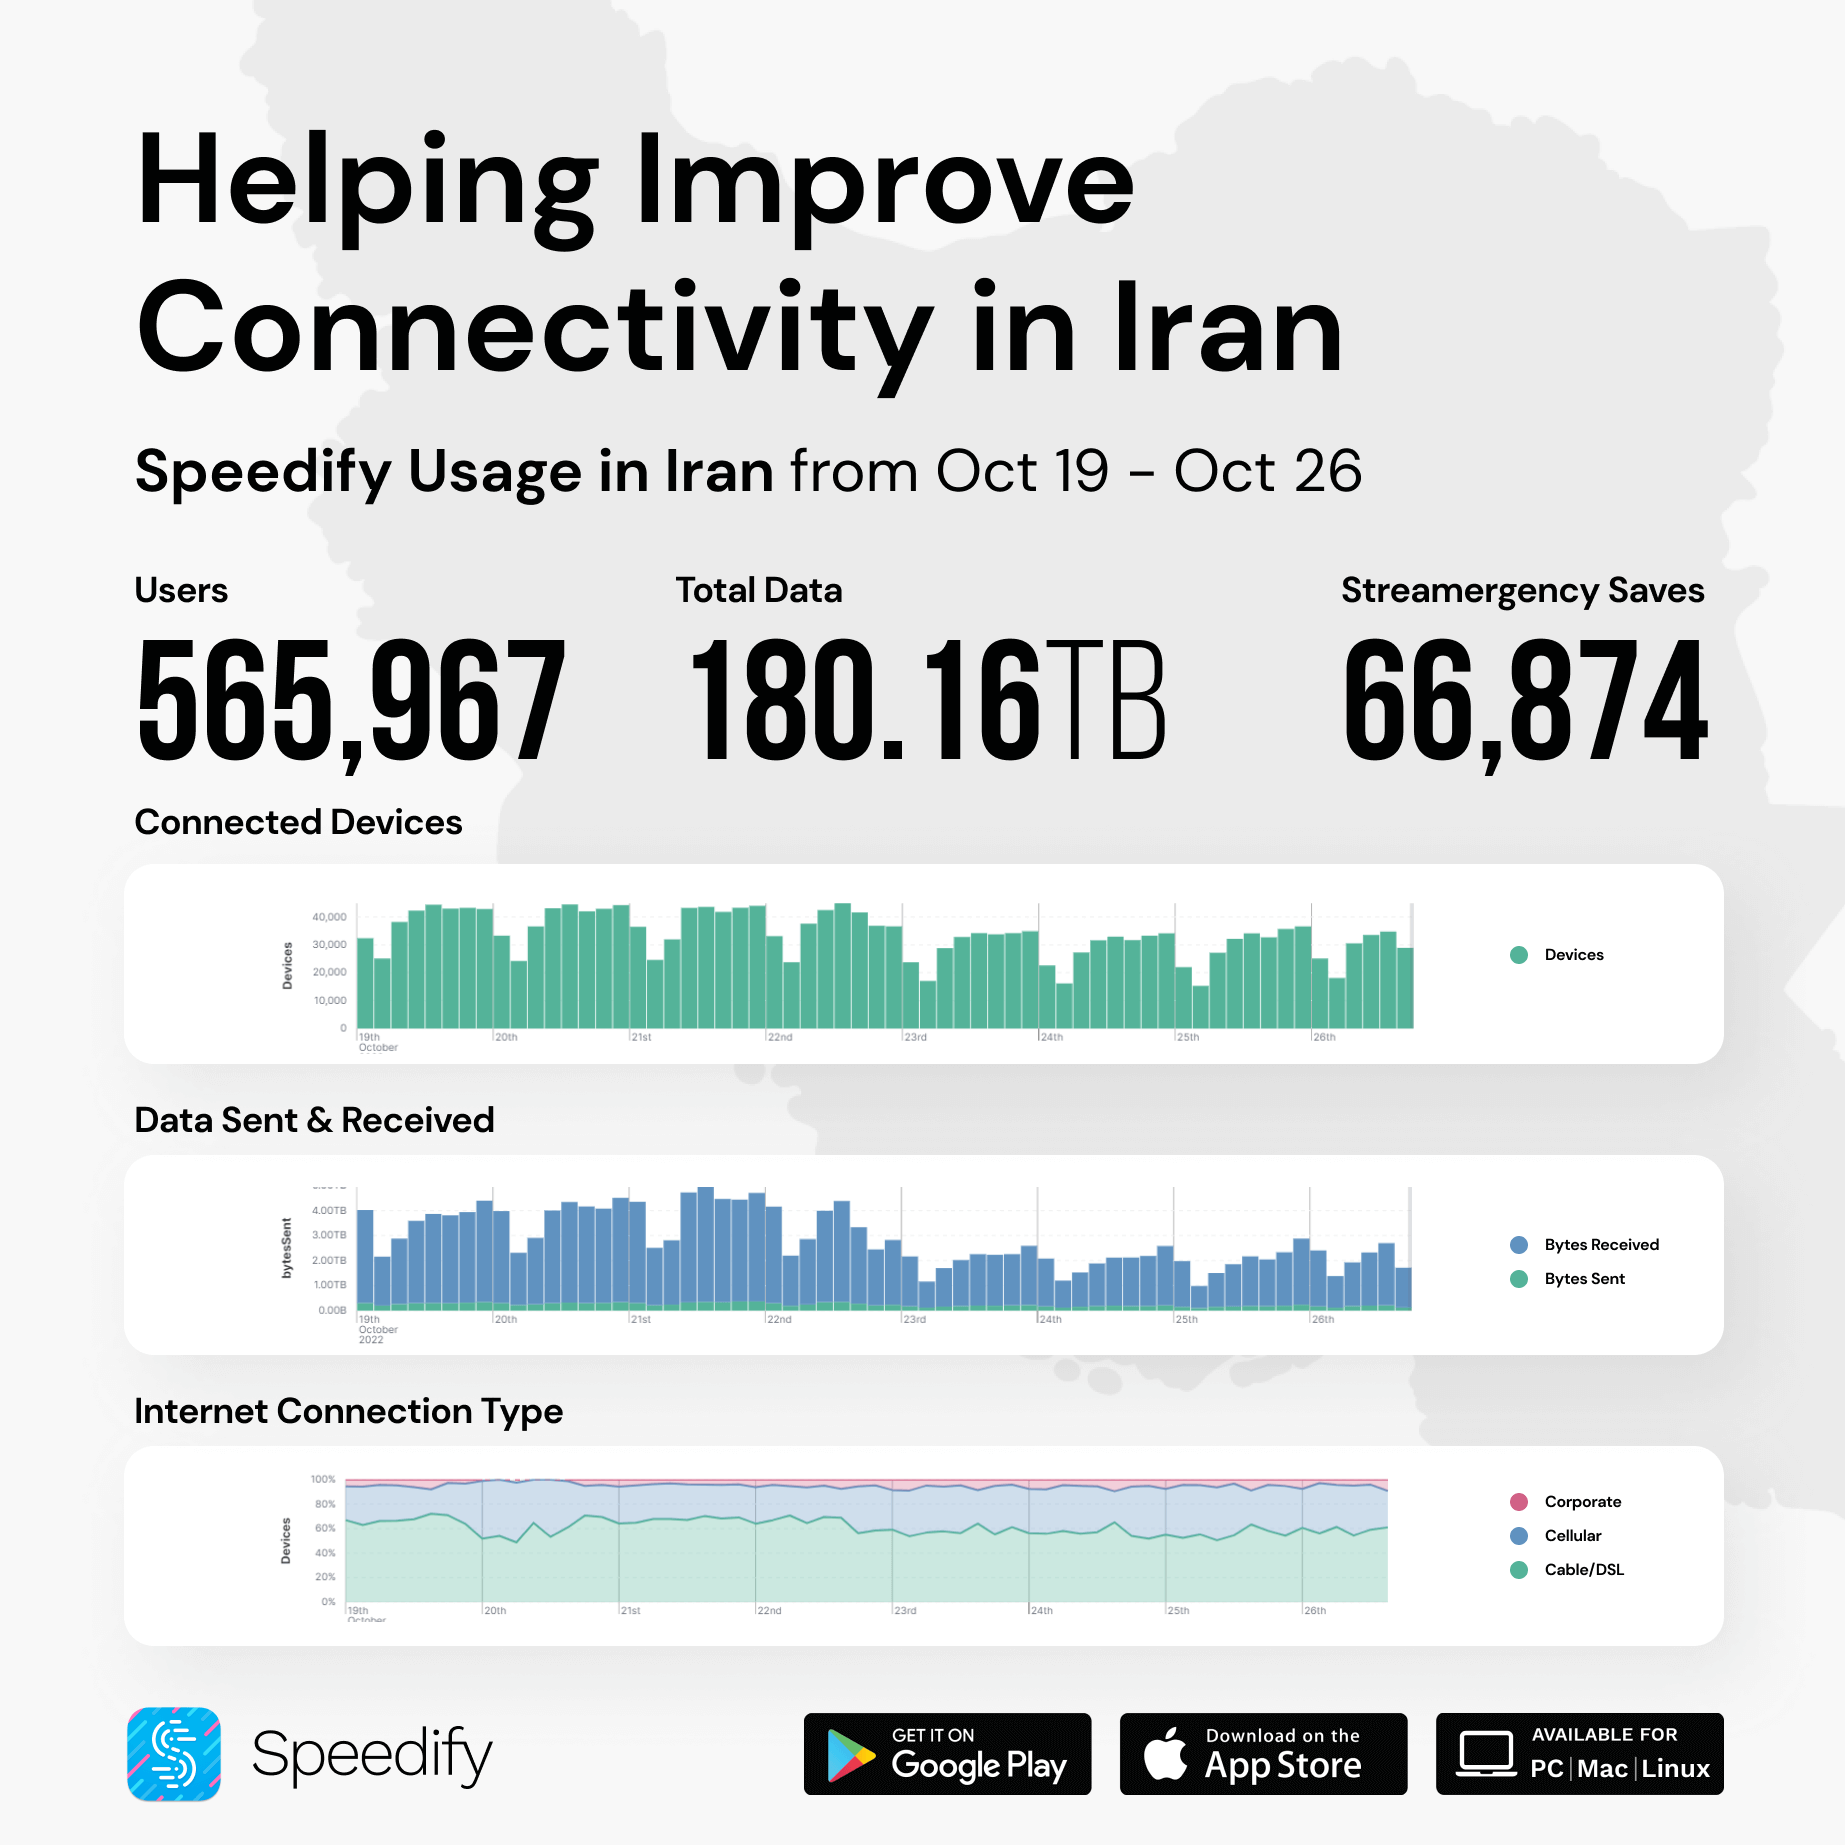 Oct 26 - Iran Internet usage for Speedify users